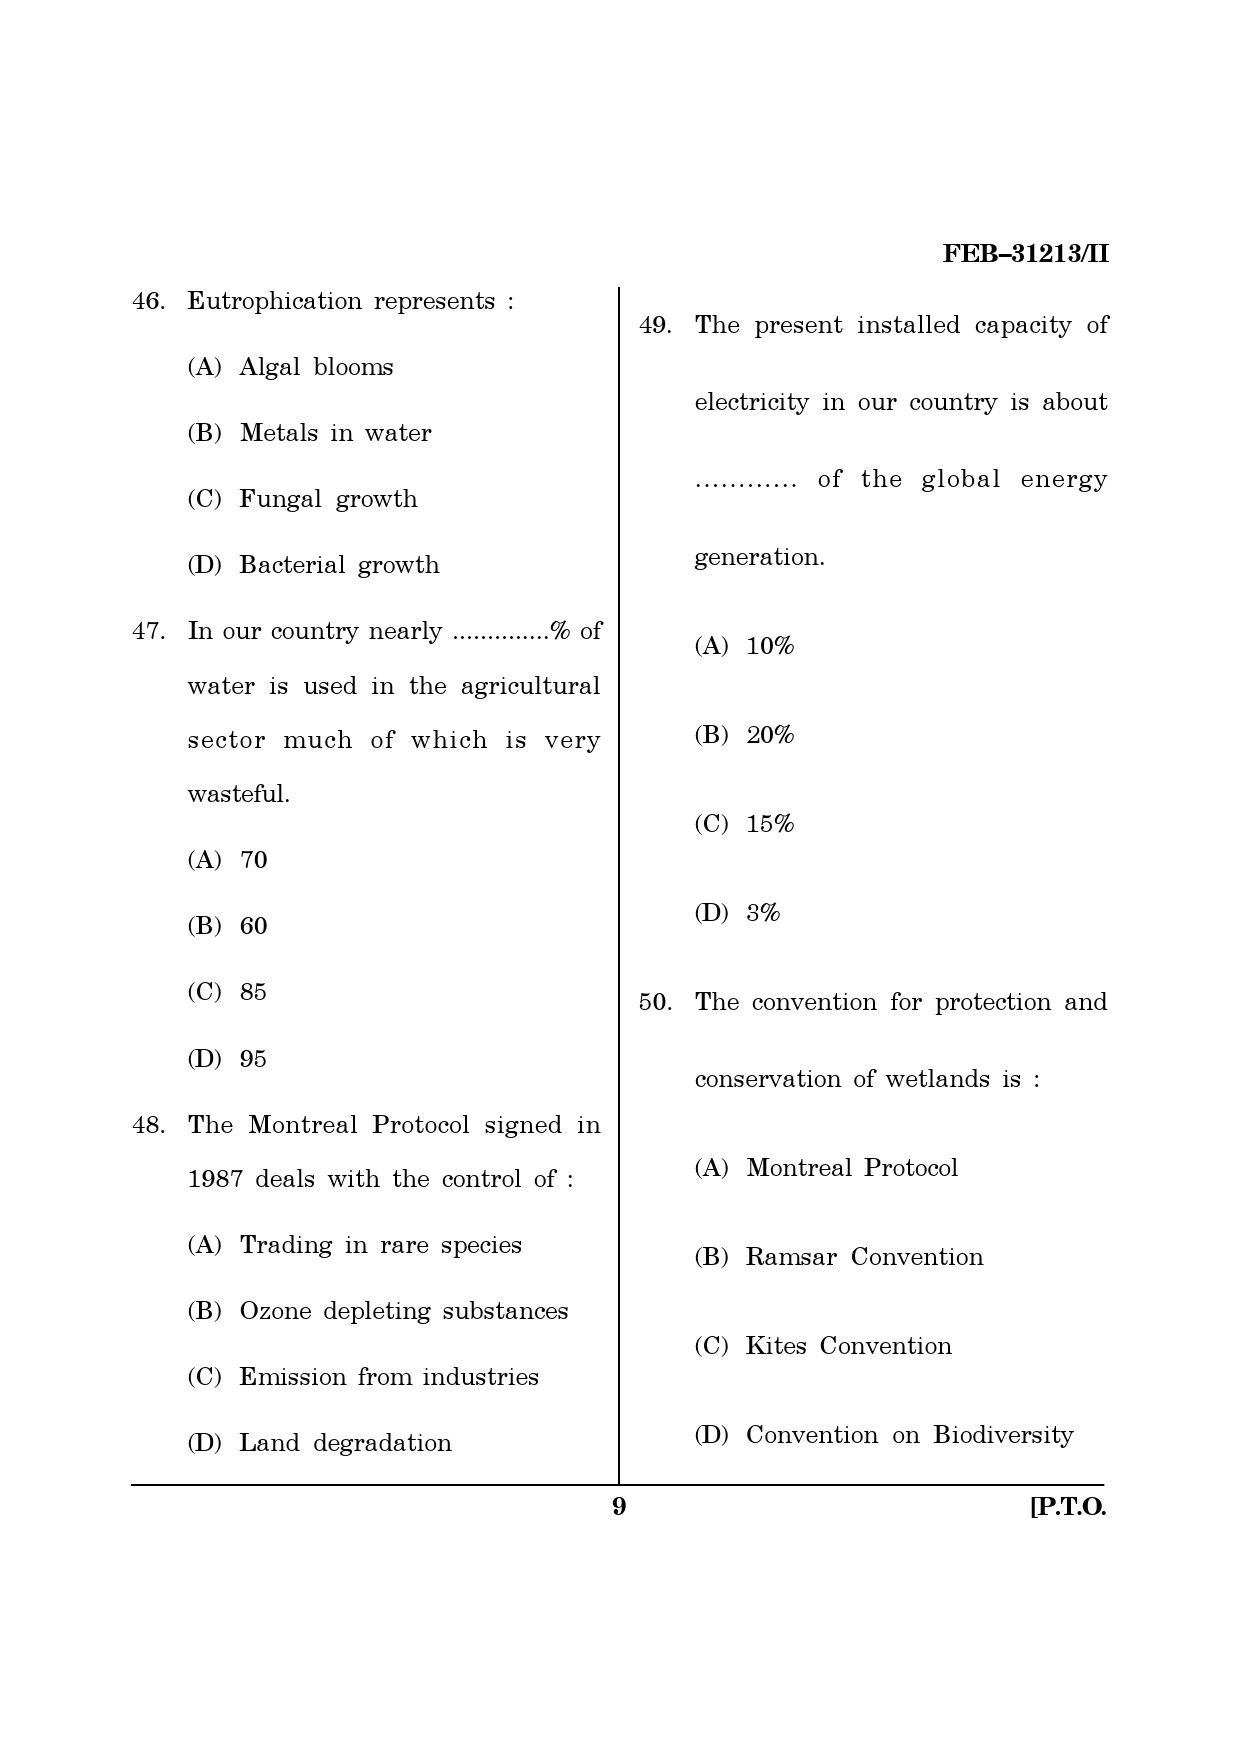 Maharashtra SET Environmental Sciences Question Paper II February 2013 9